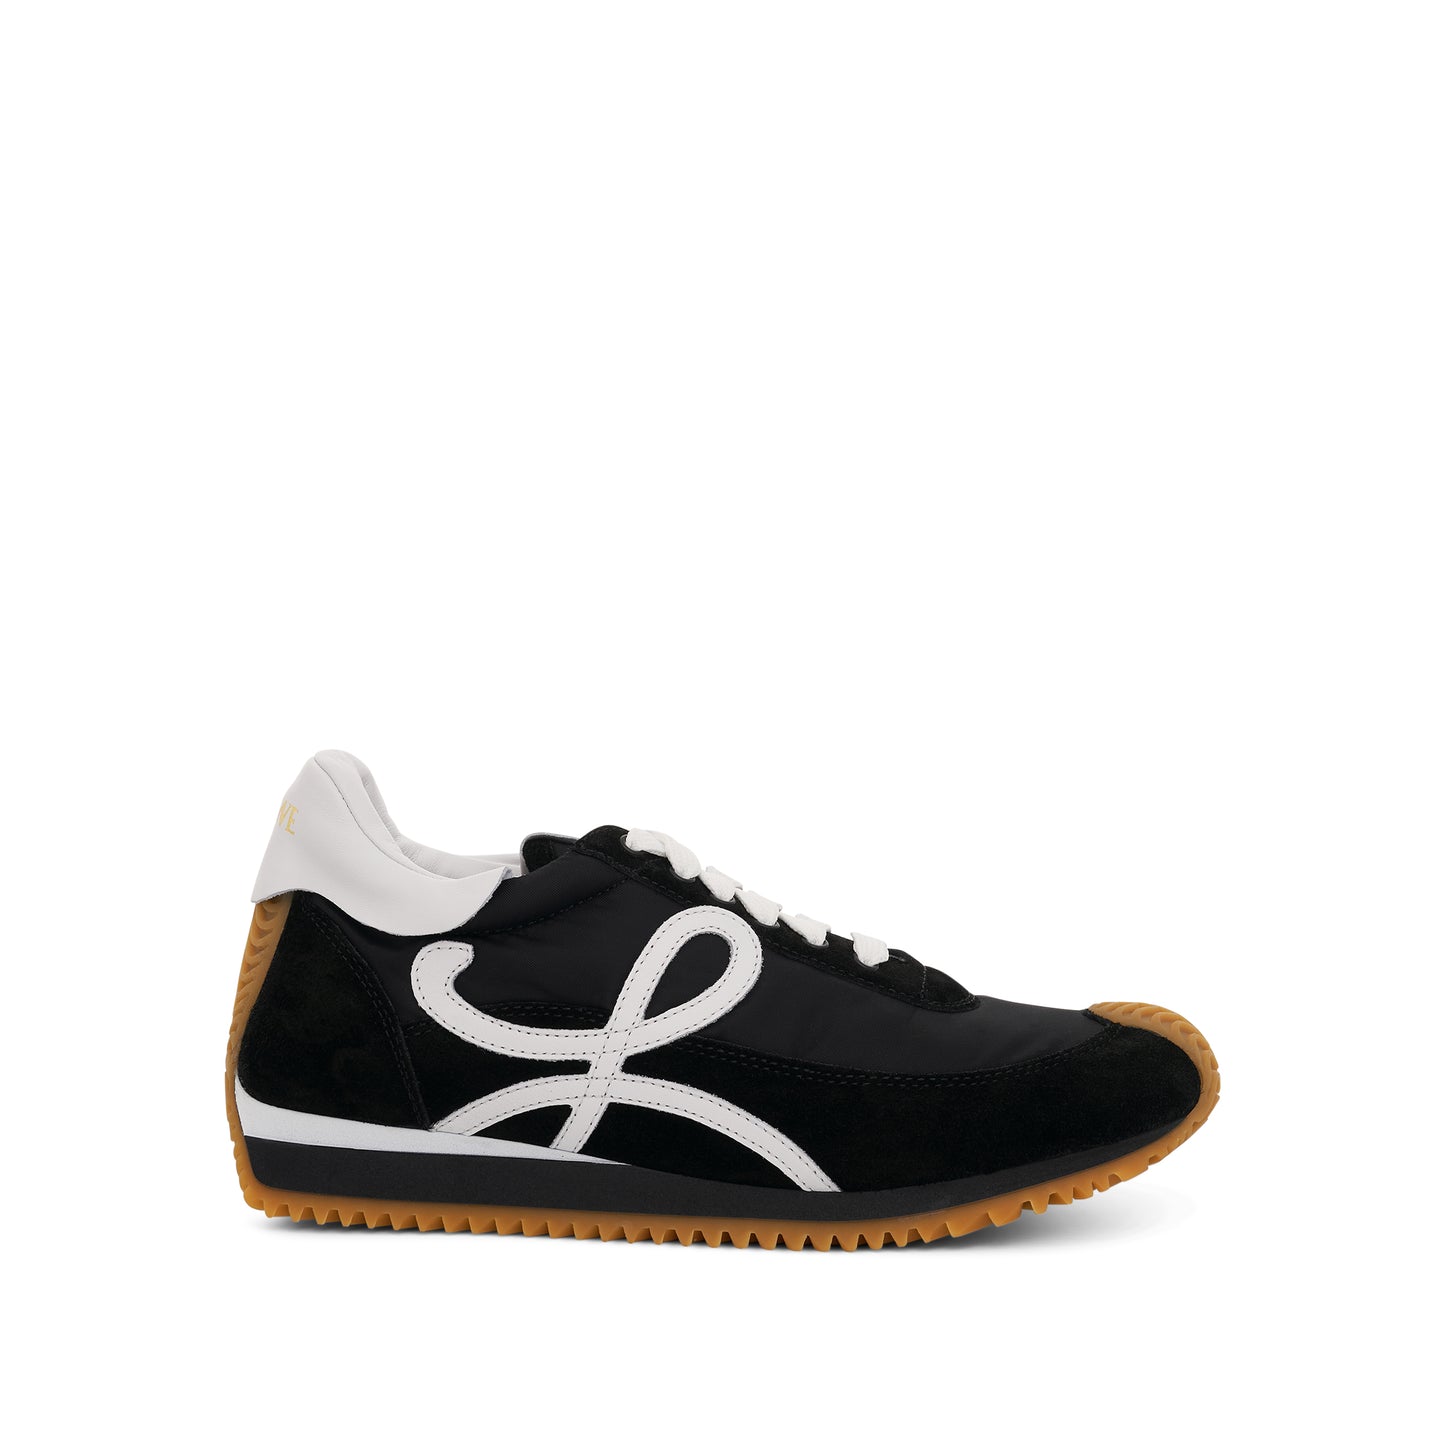 Flow Runner Sneaker in Nylon and Suede in Black/White